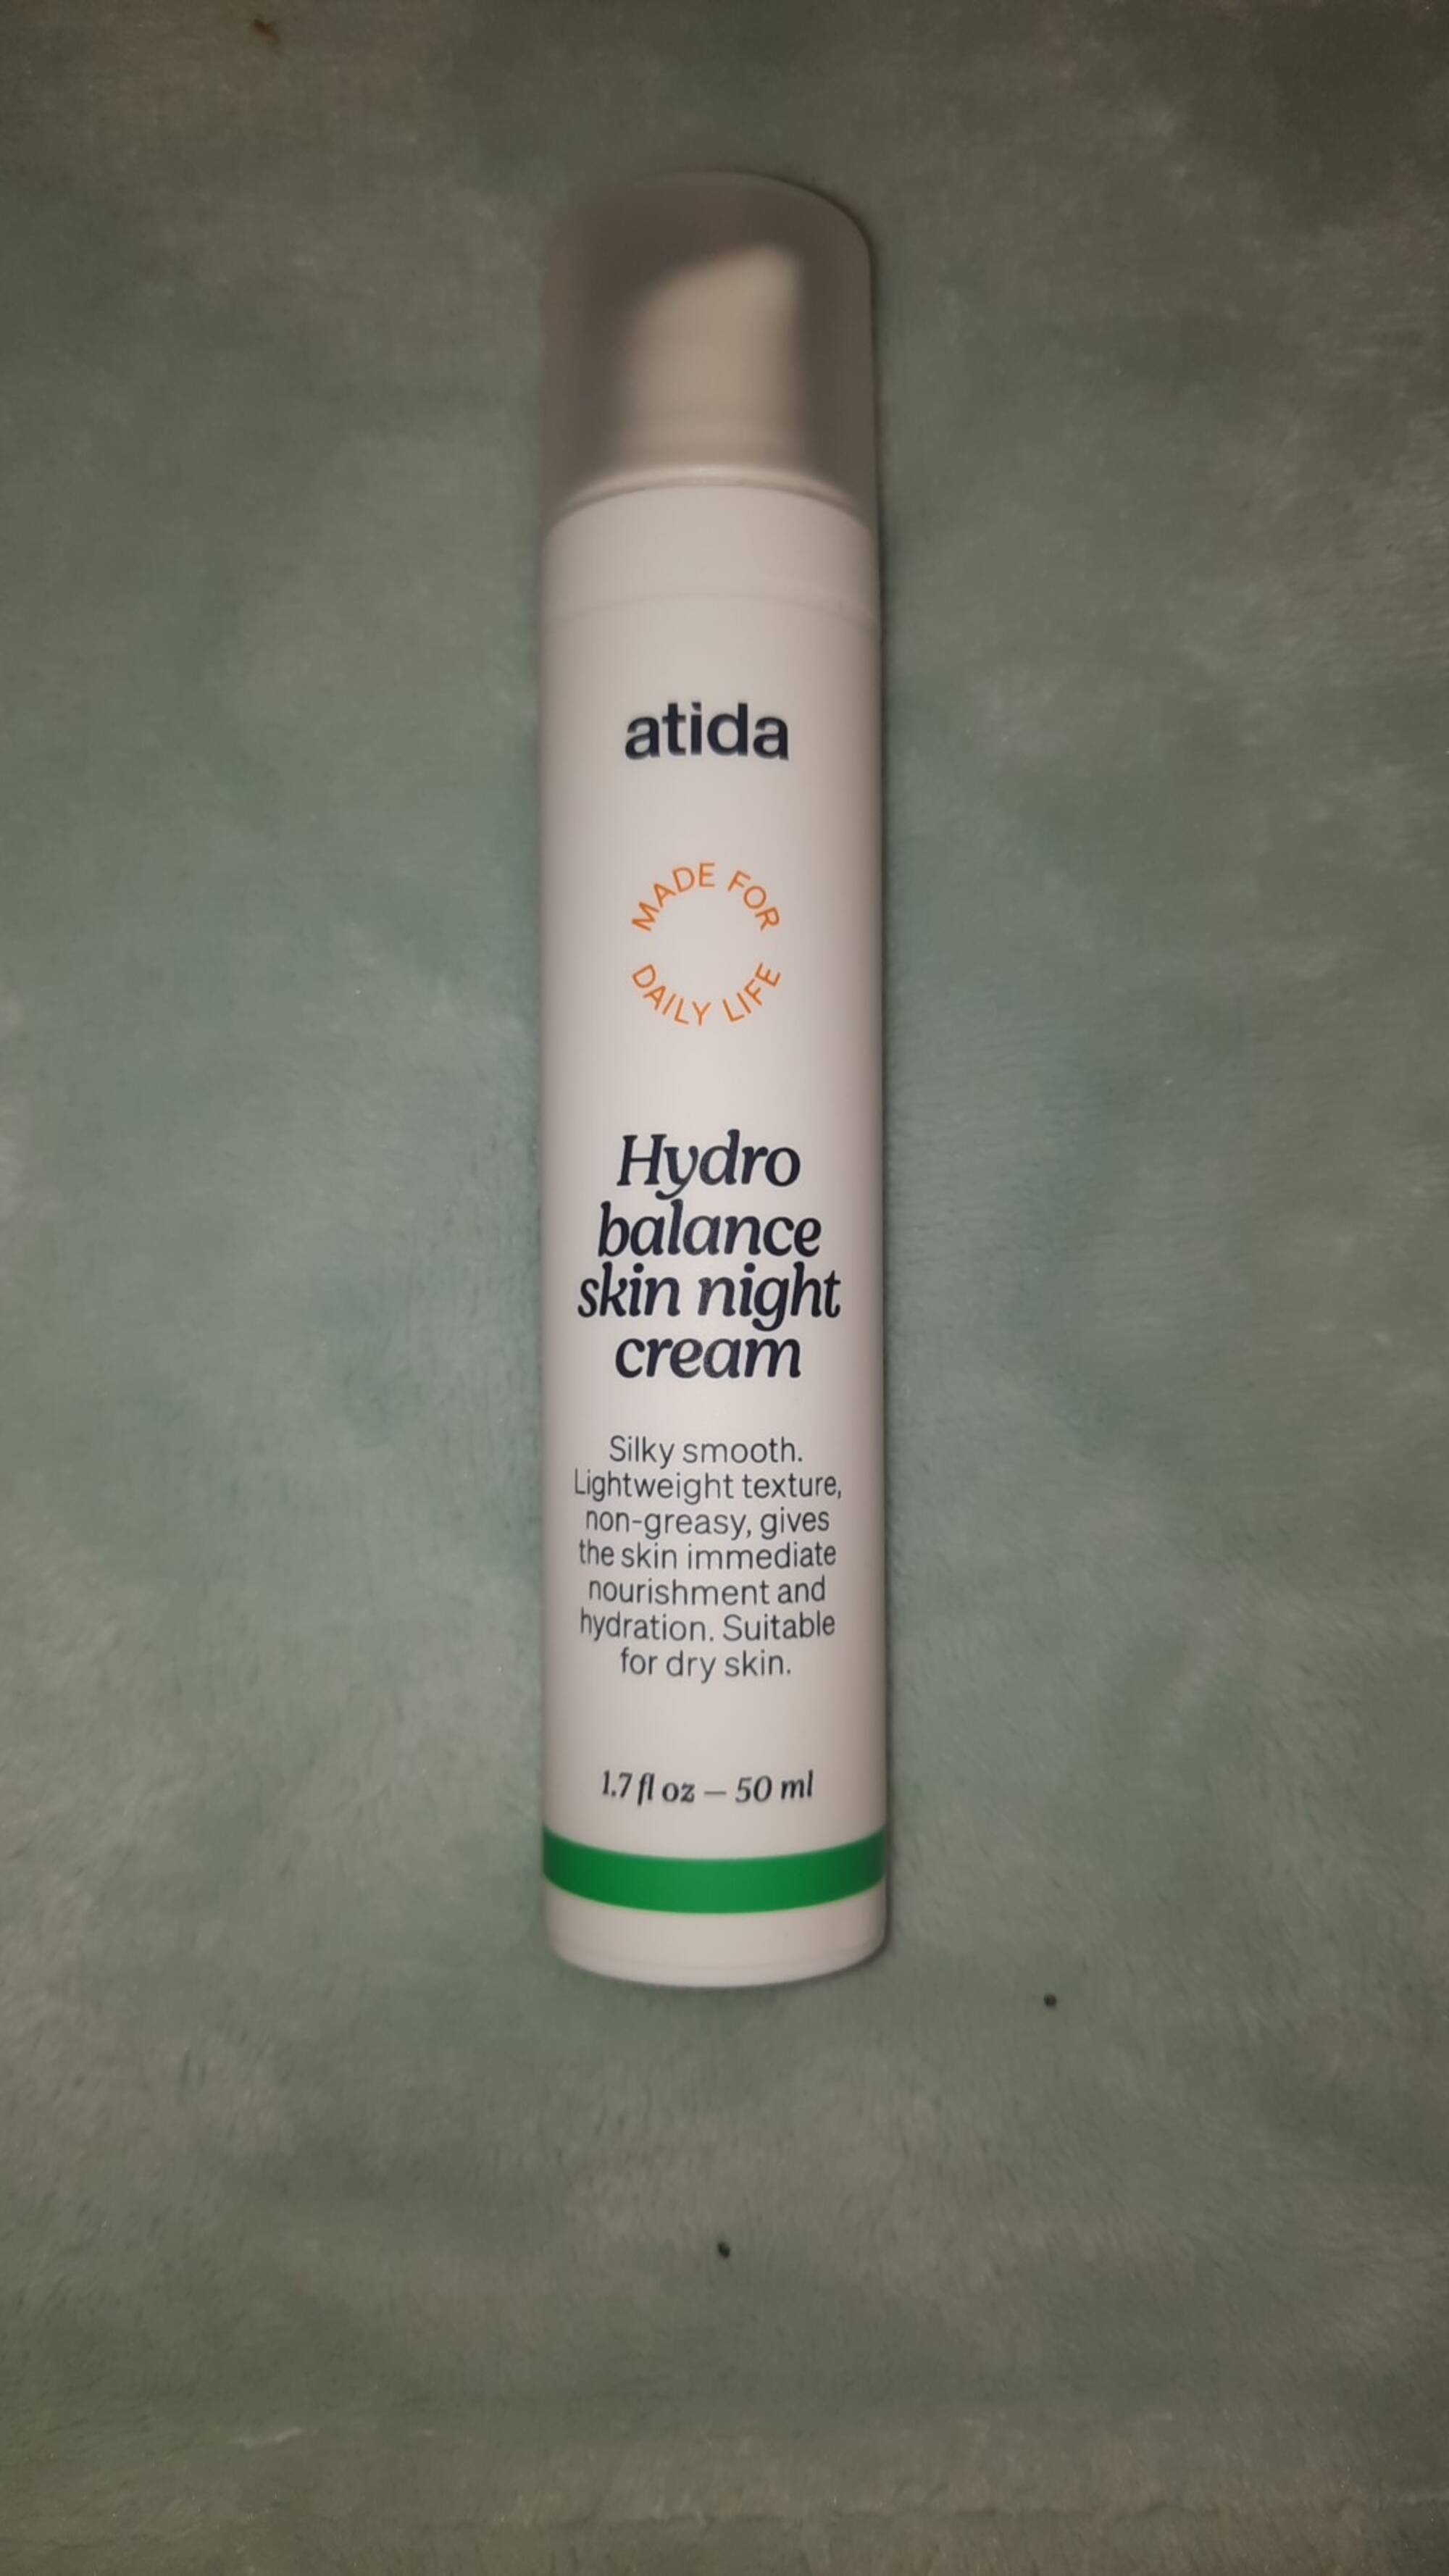 ATIDA - Hydro balance skin night cream